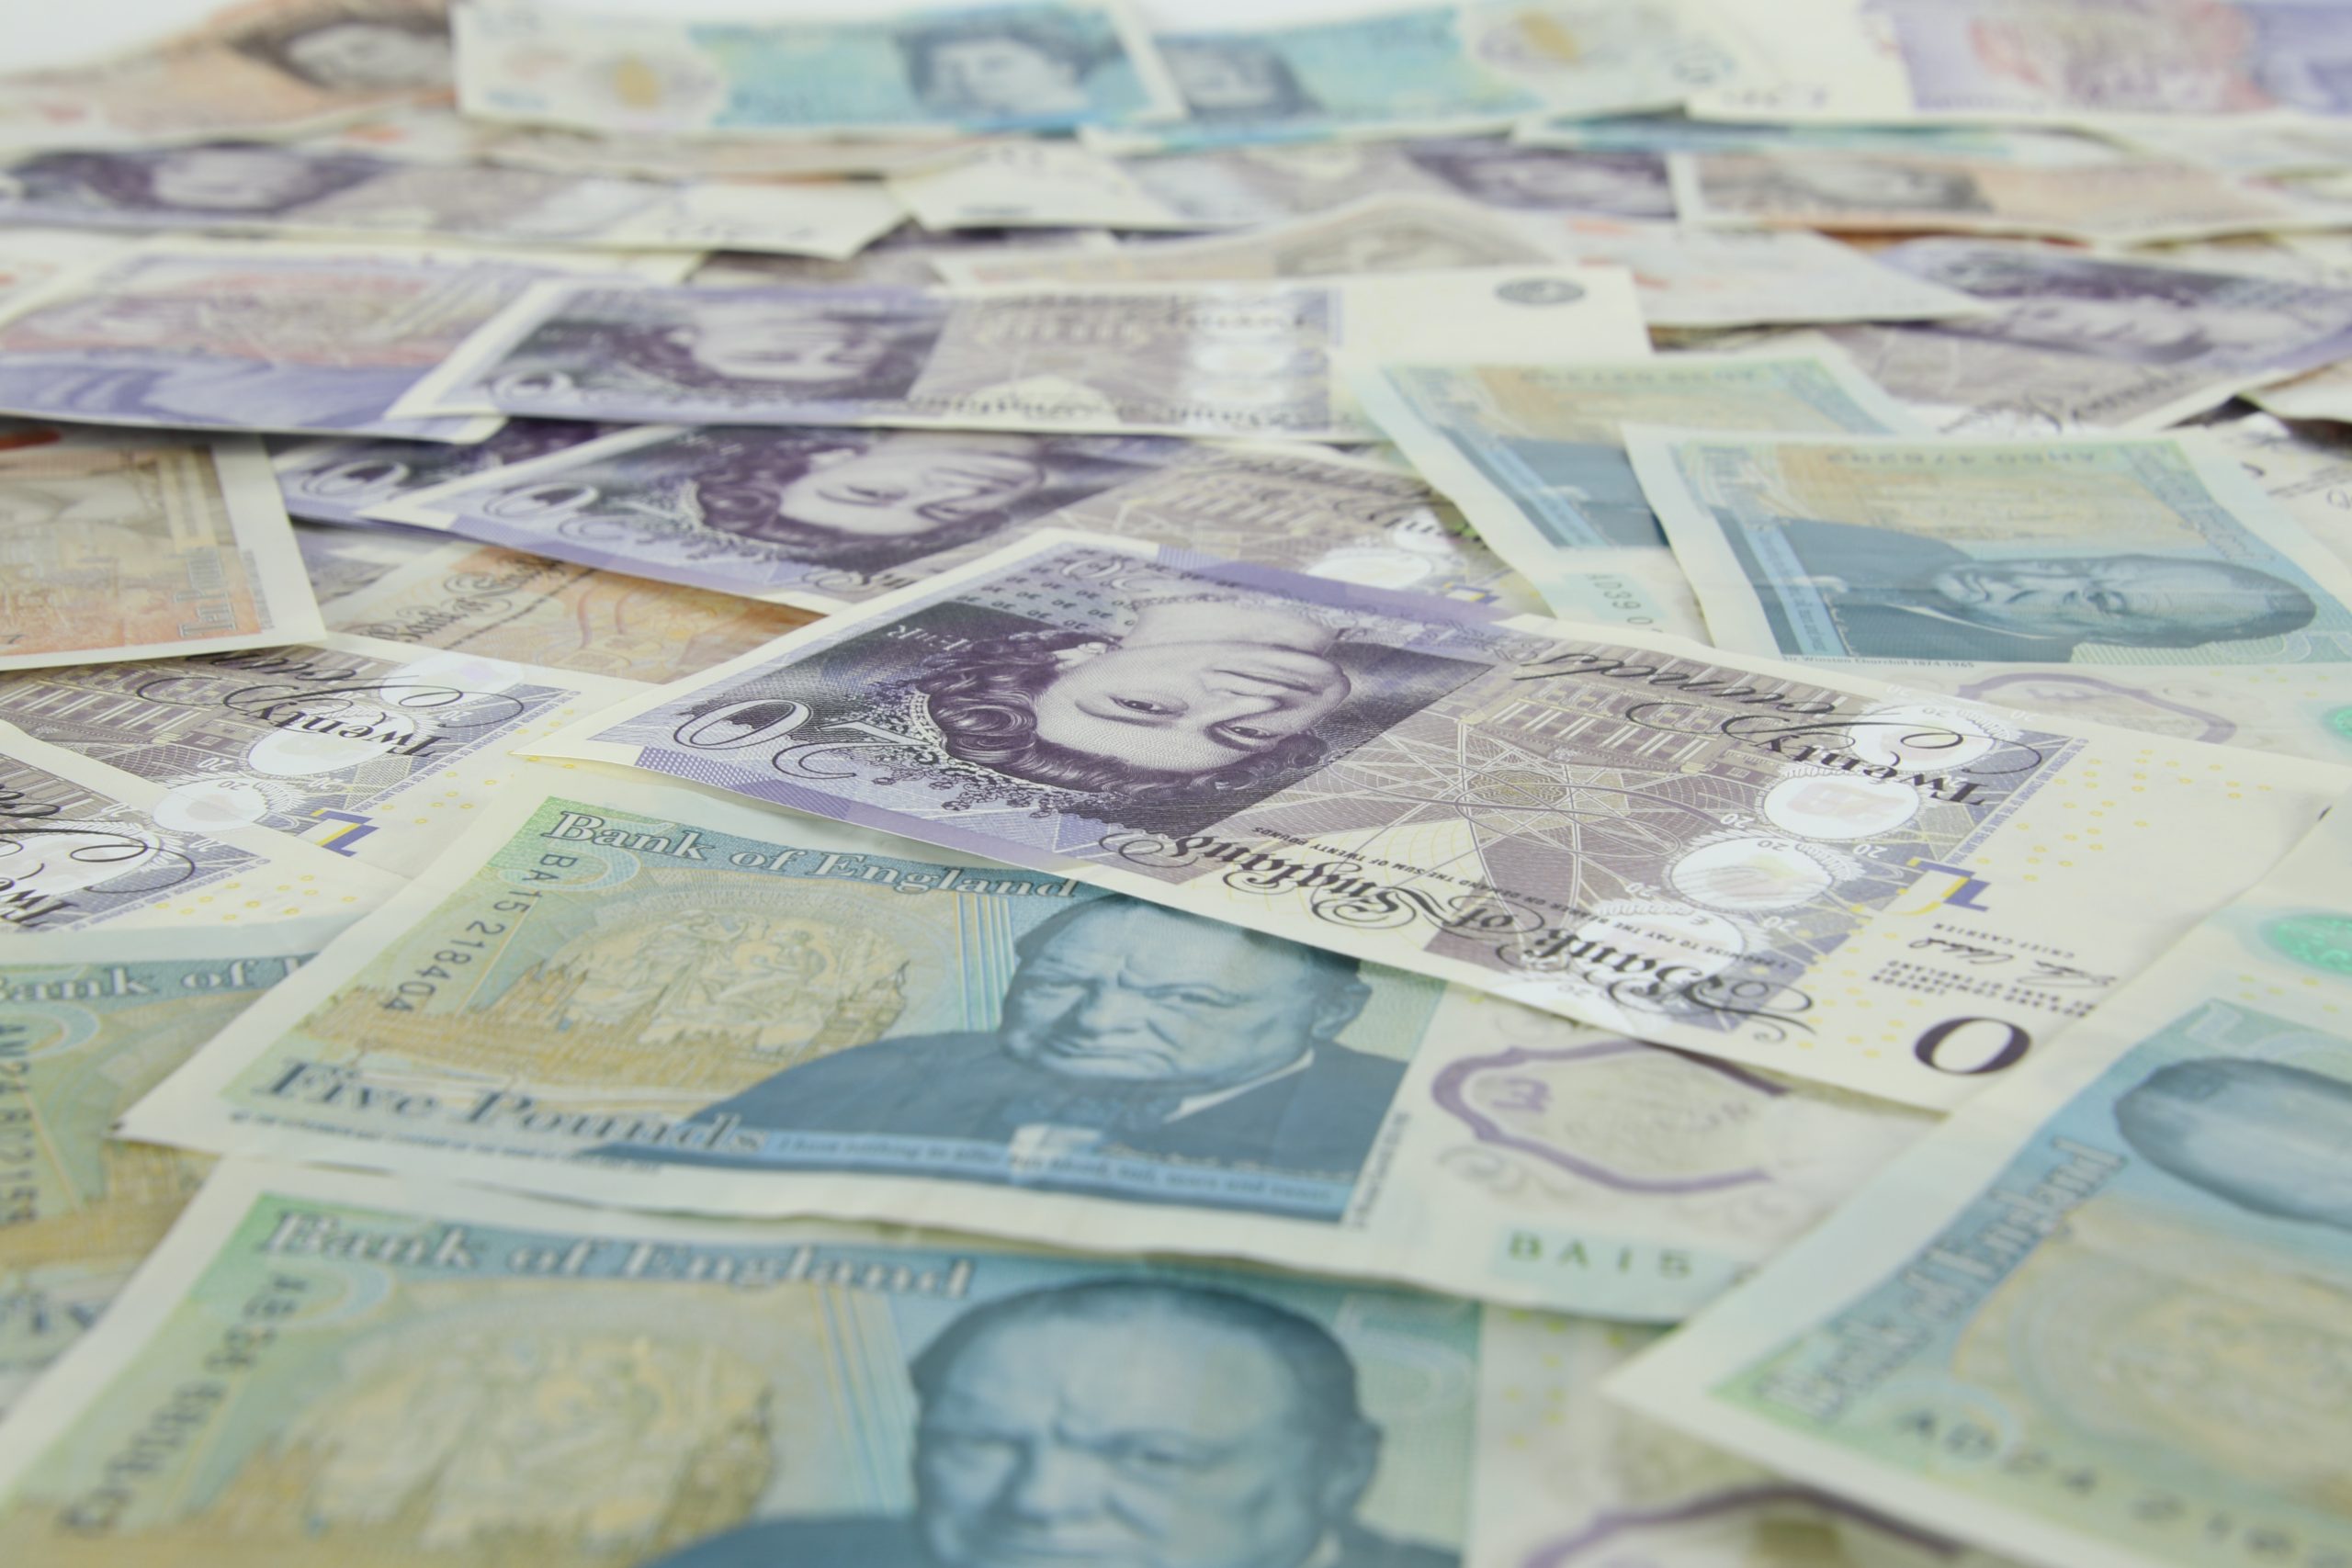 photo of pound bills to illustrate per diem rates in uk